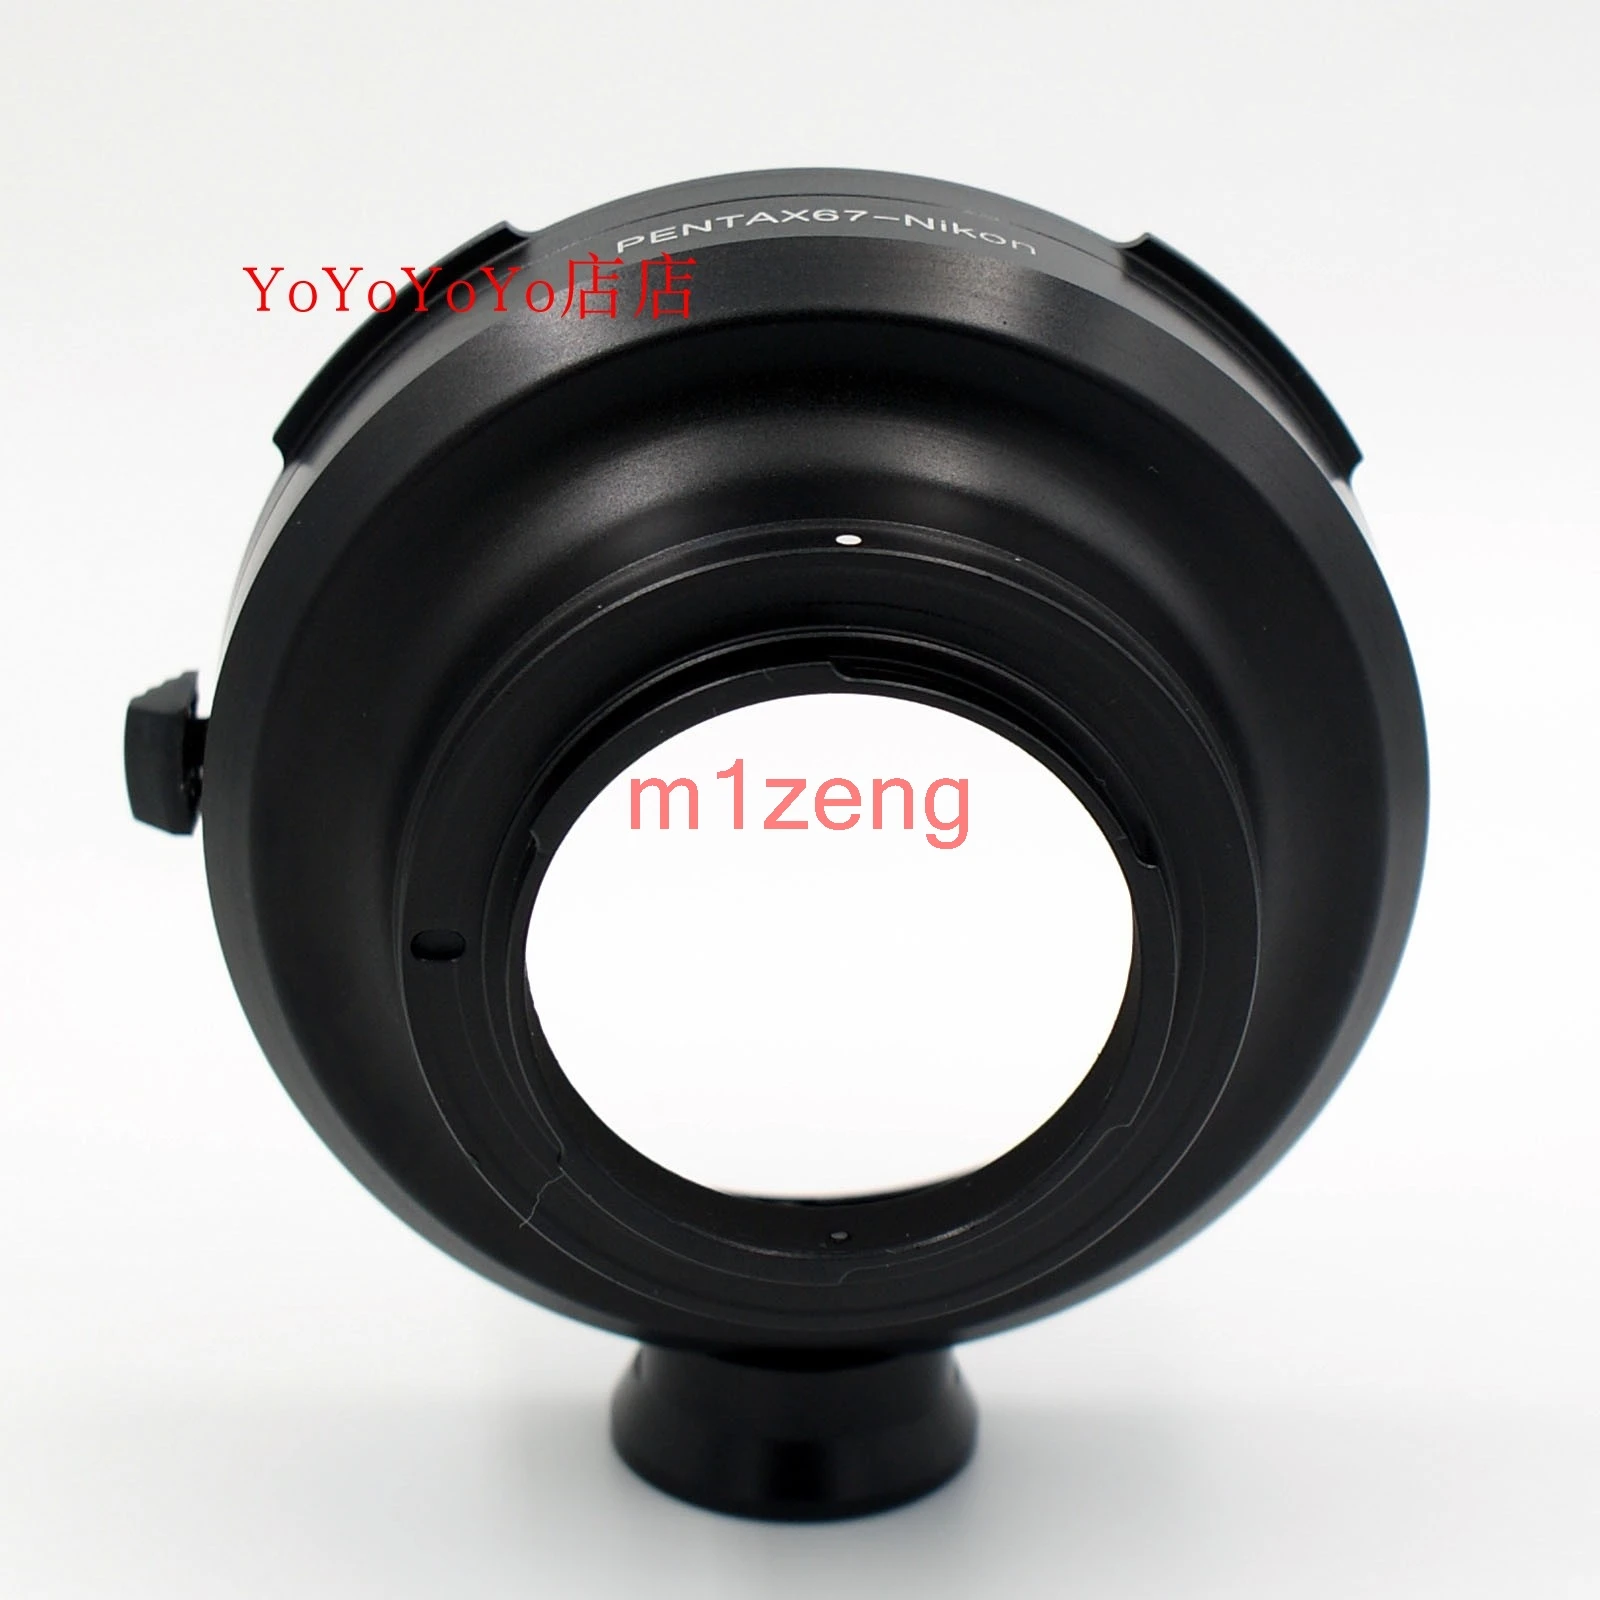 

pk67-AI adapter ring for Pentax 67 PK67 PT67 Lens To nikon d3 d4 D90 d300 d600 D700 d800 D5000 d5500 d7100 d3300 camera